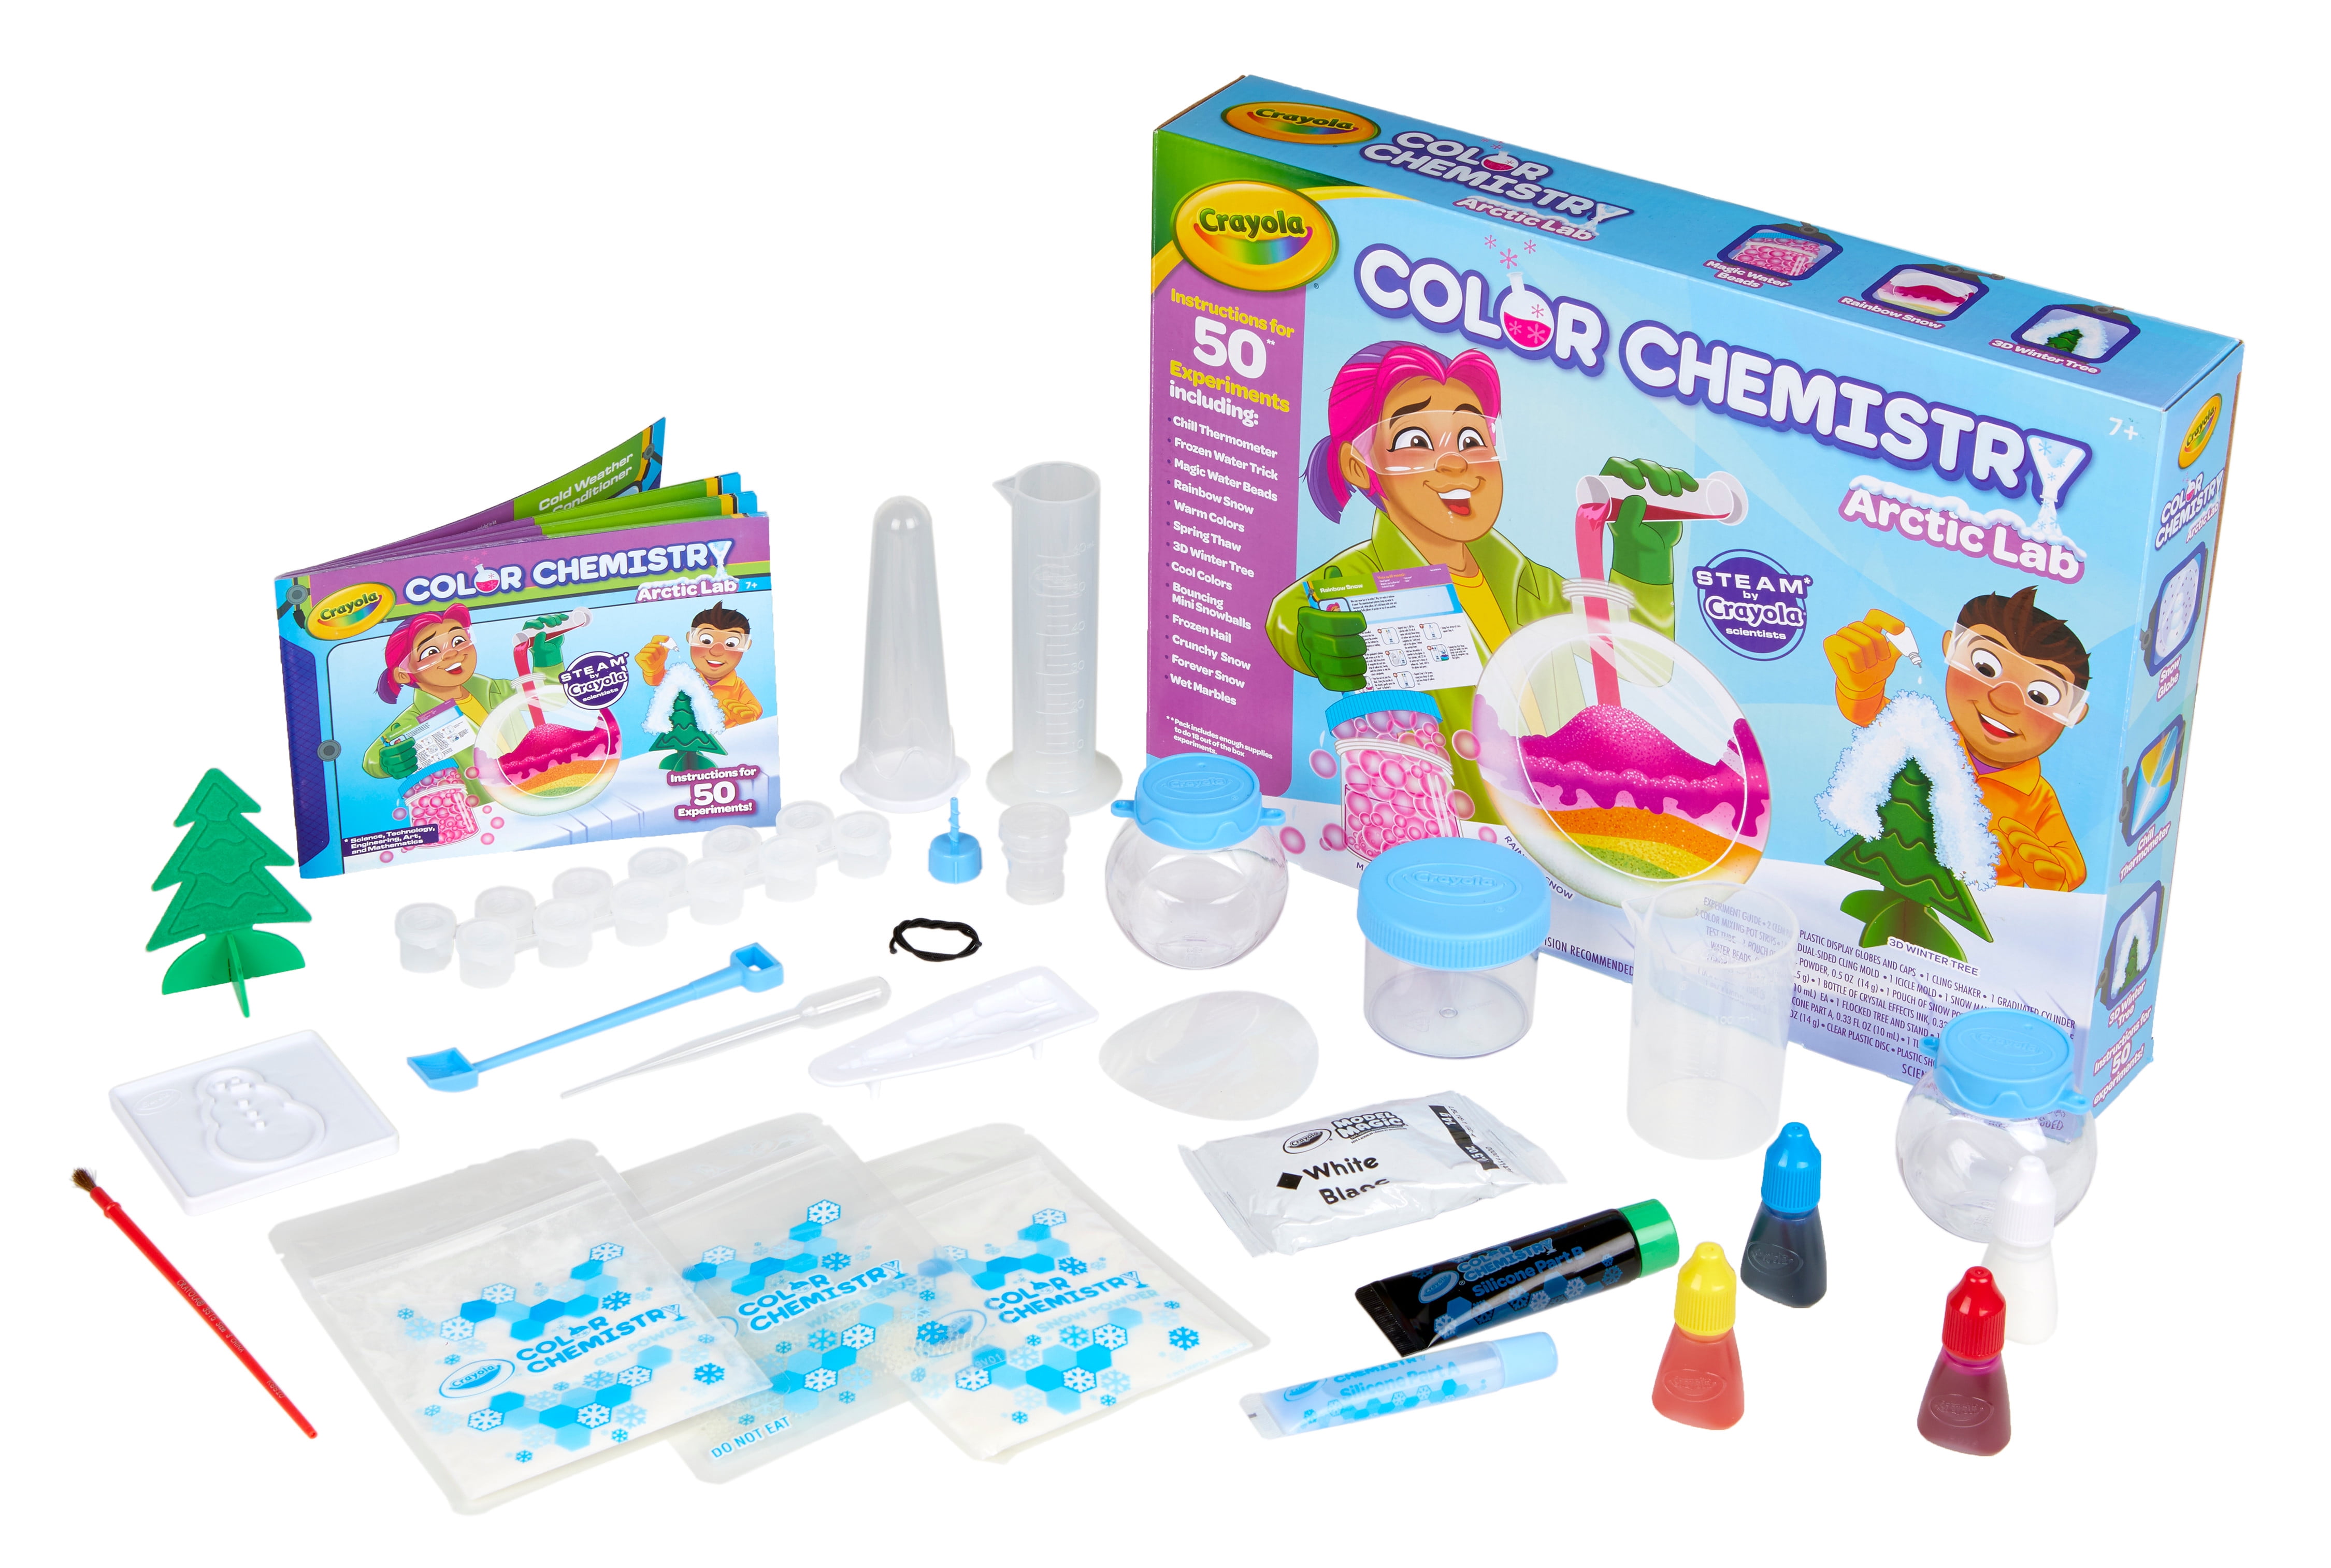 Brain Freeze Ice Cream Making Kit, Science + Play + Math